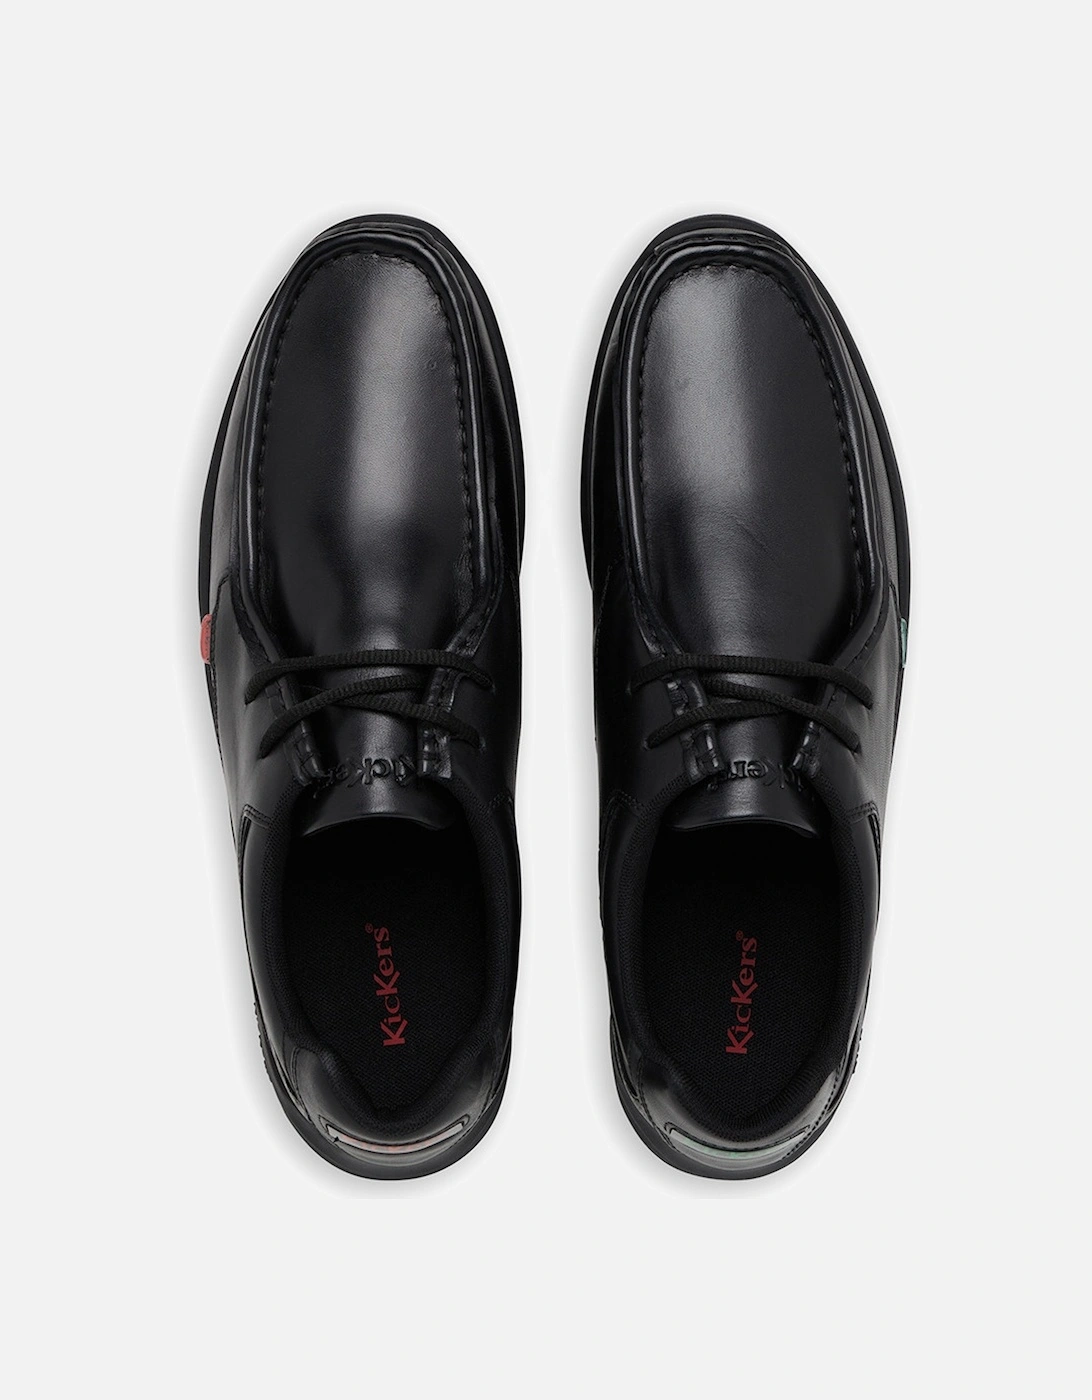 Mens Reasan Shoes (Black)